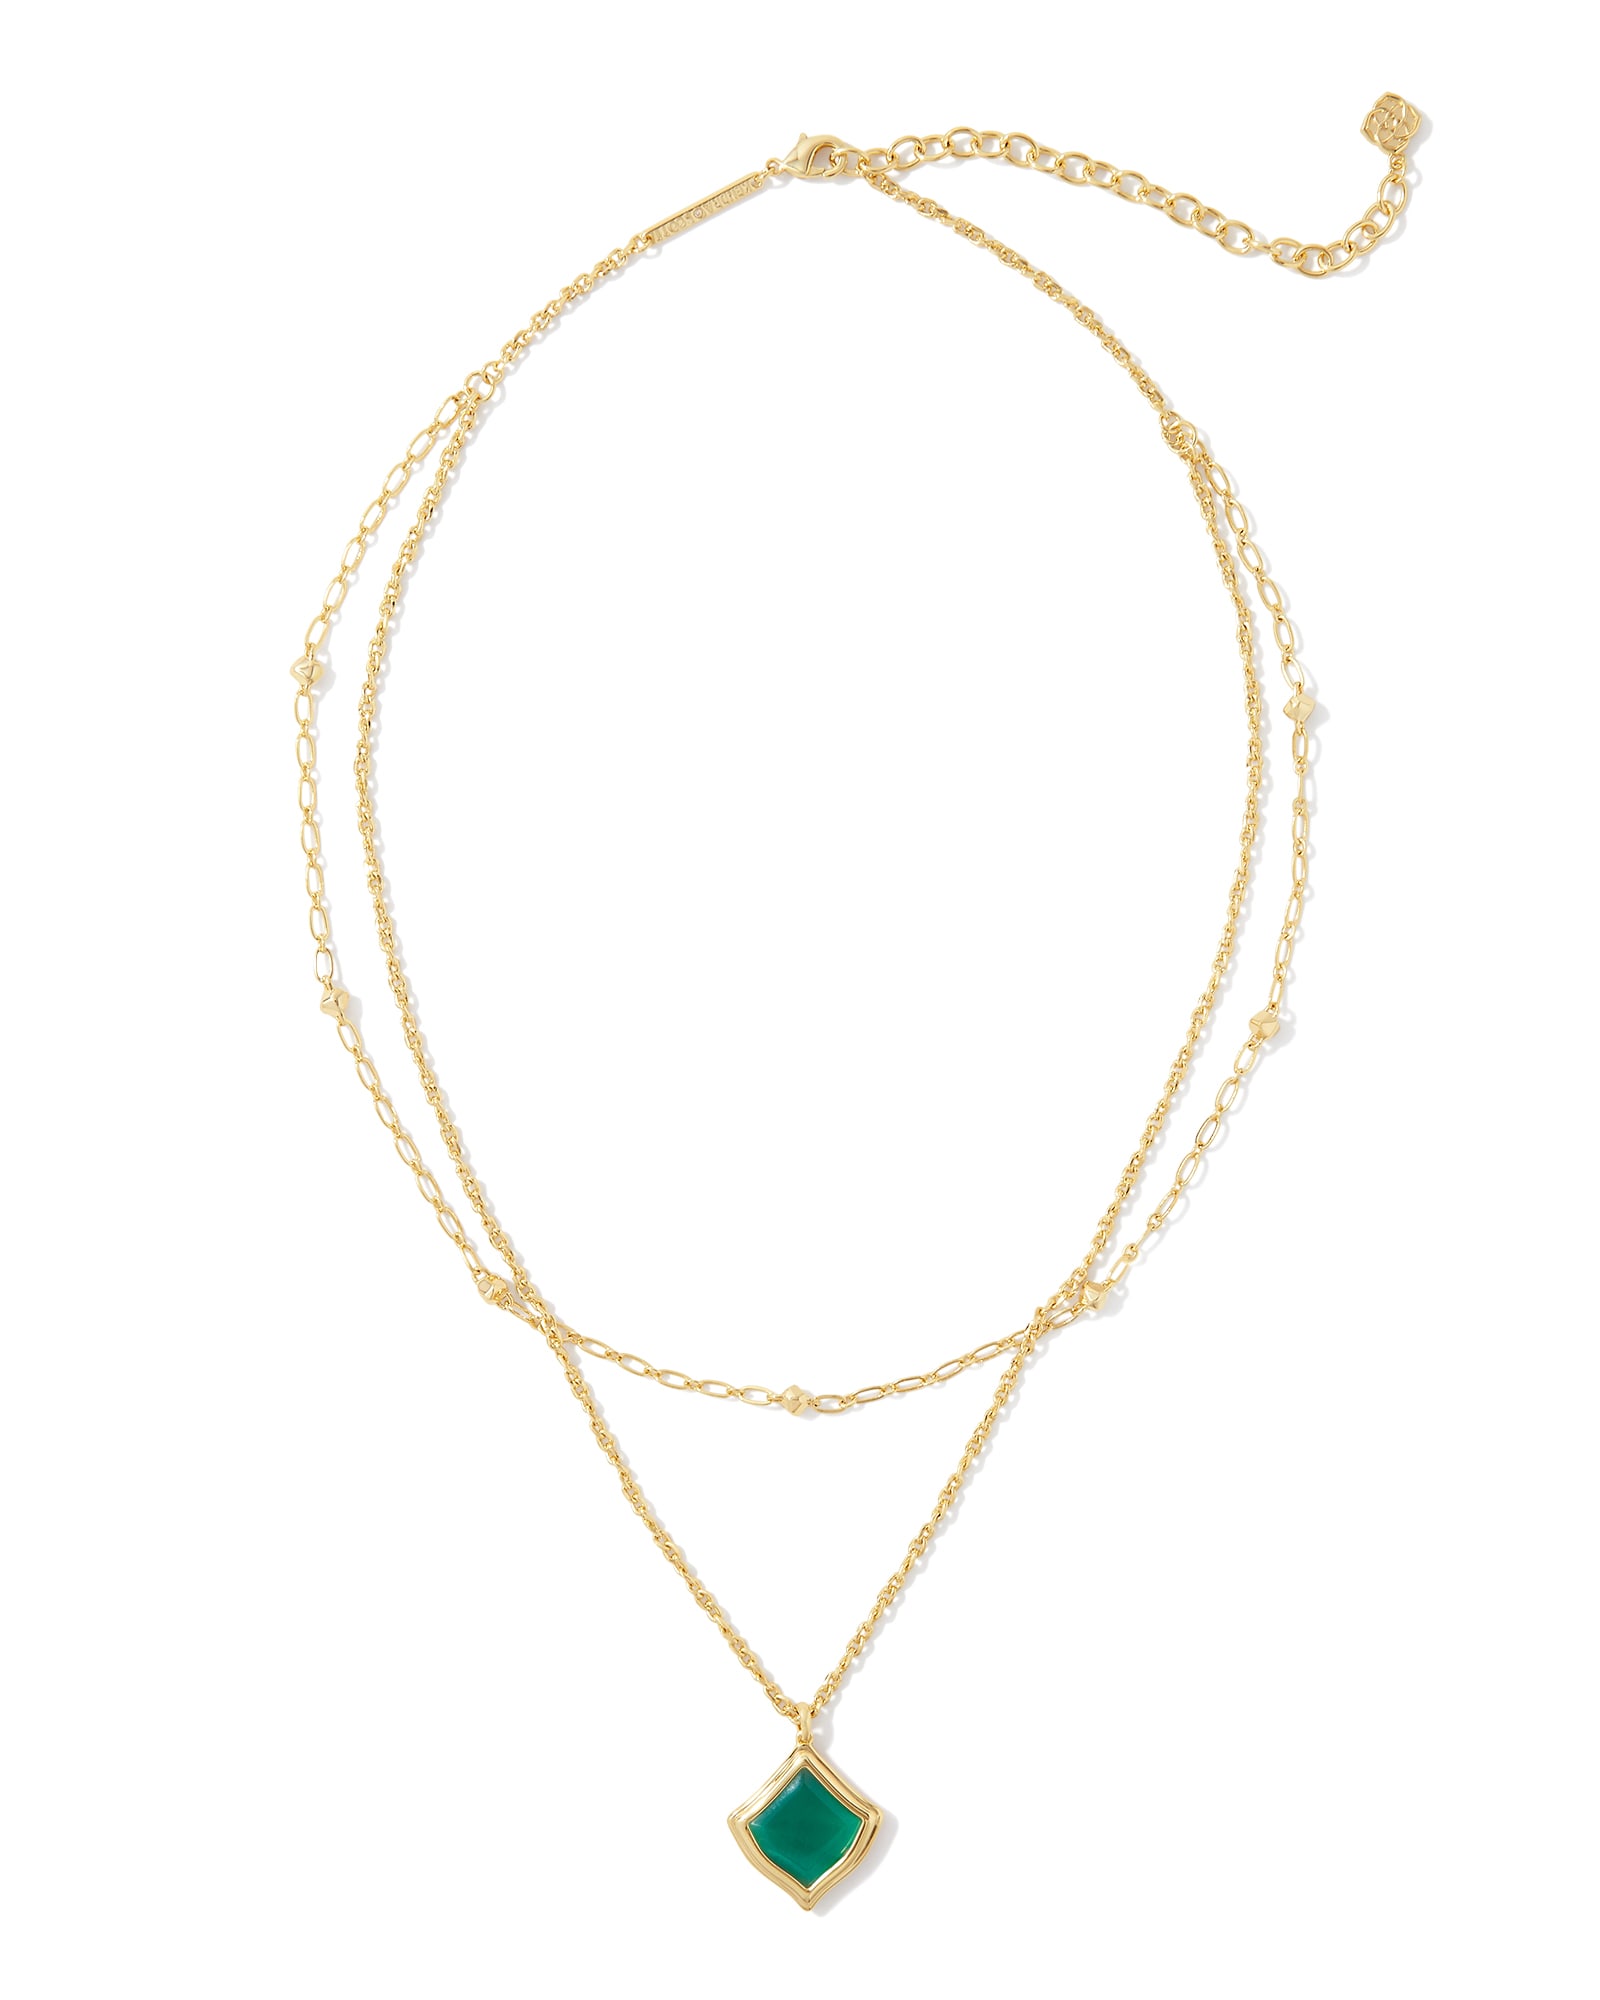 Kacey Gold Multi Strand Necklace in Emerald Cat's Eye | Kendra Scott